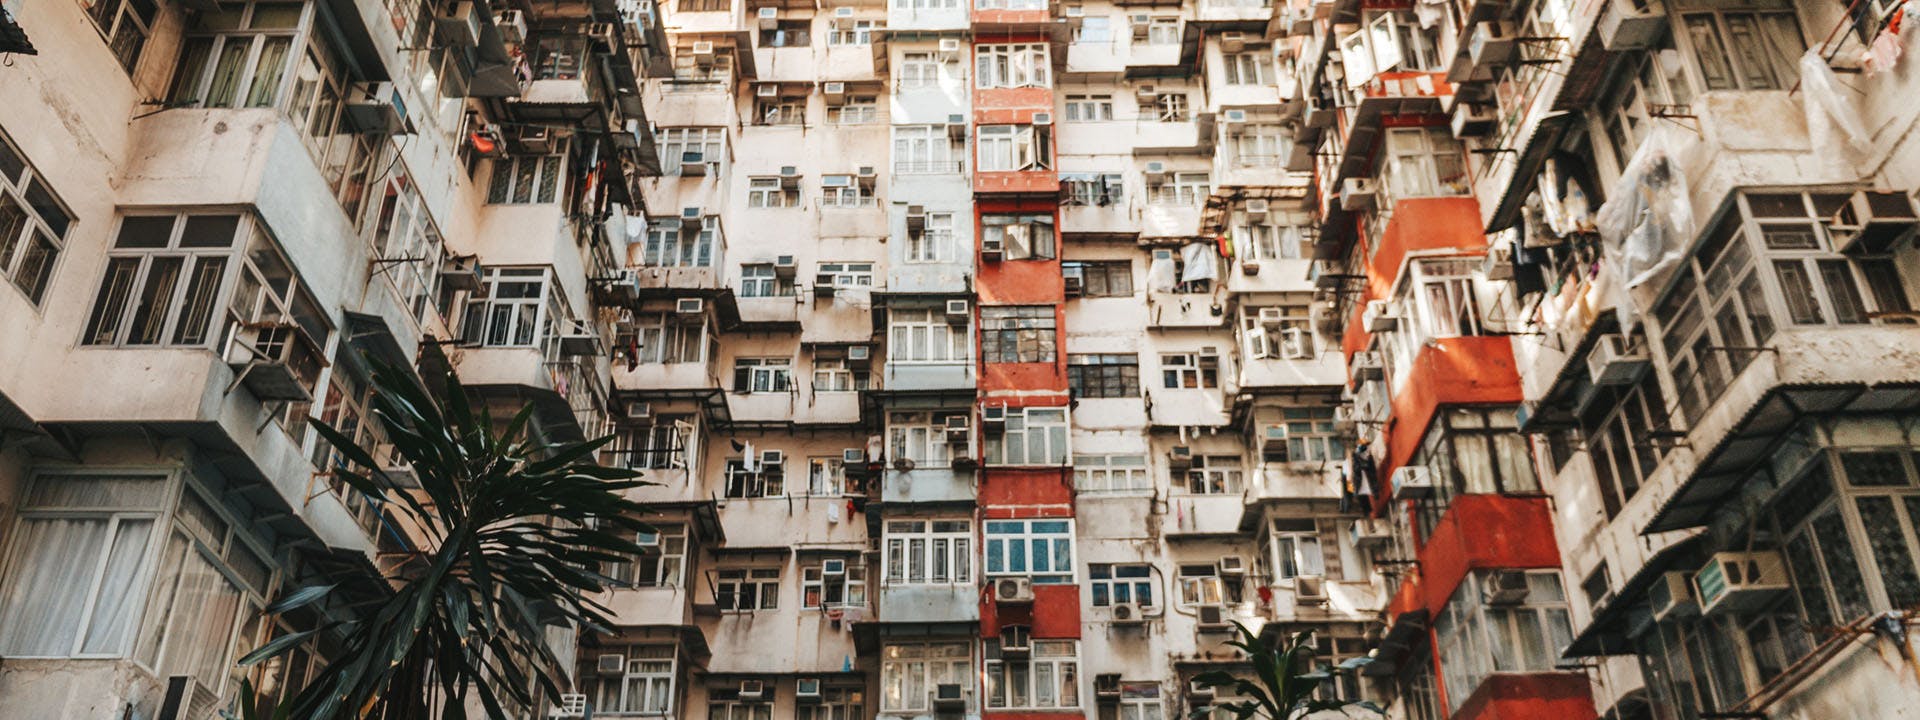 Hong Kong Residential building